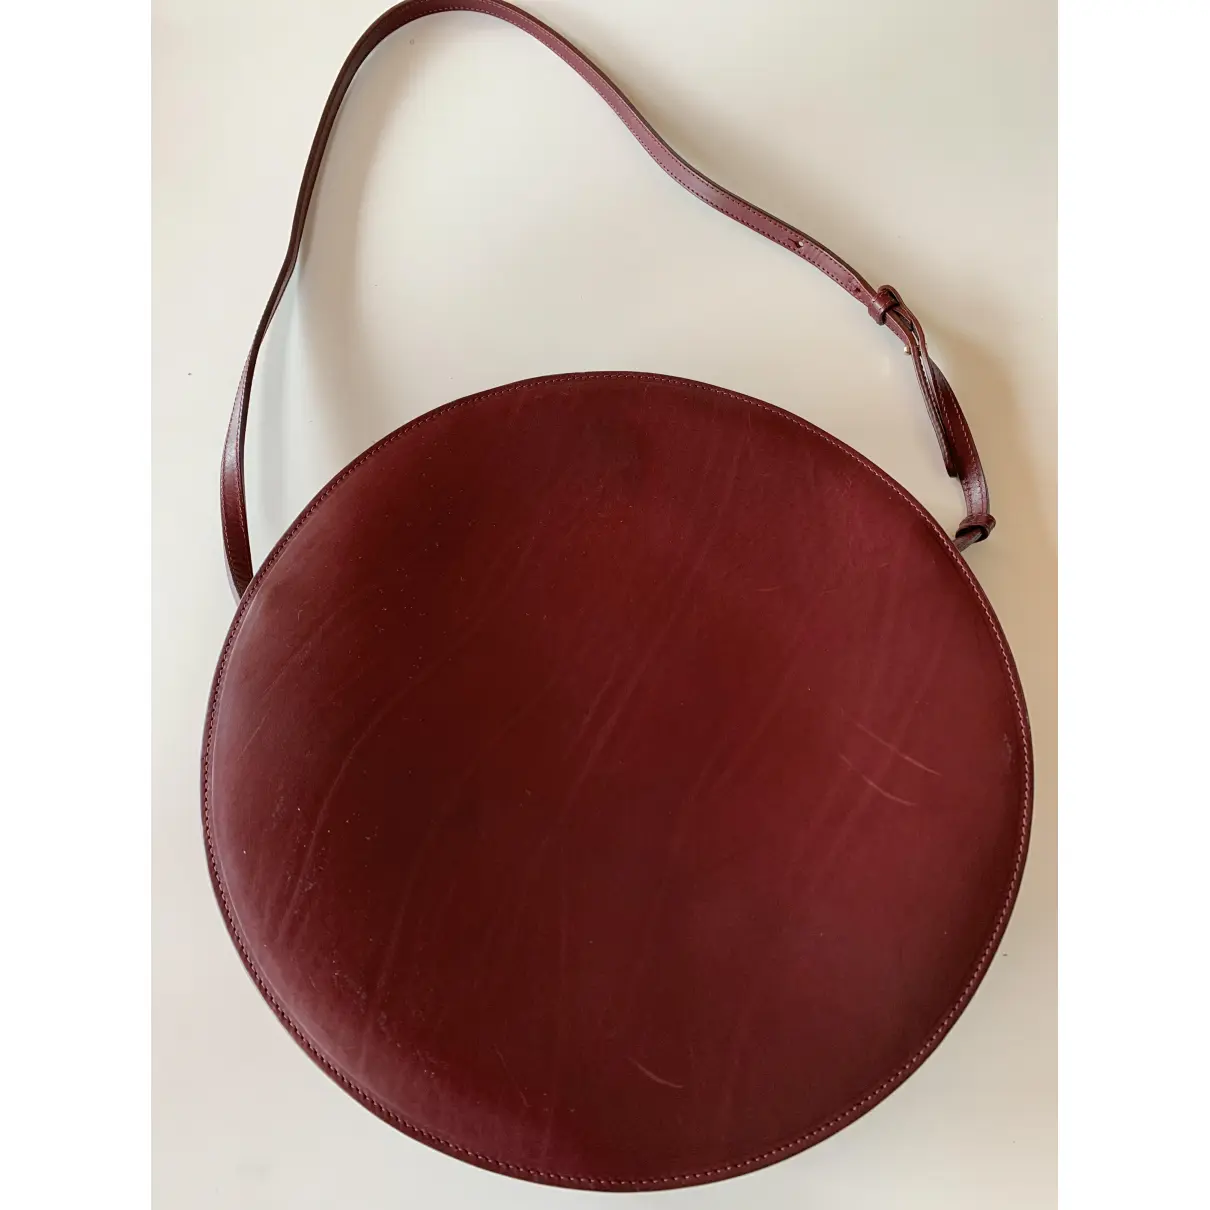 Buy Sézane Nicole leather handbag online